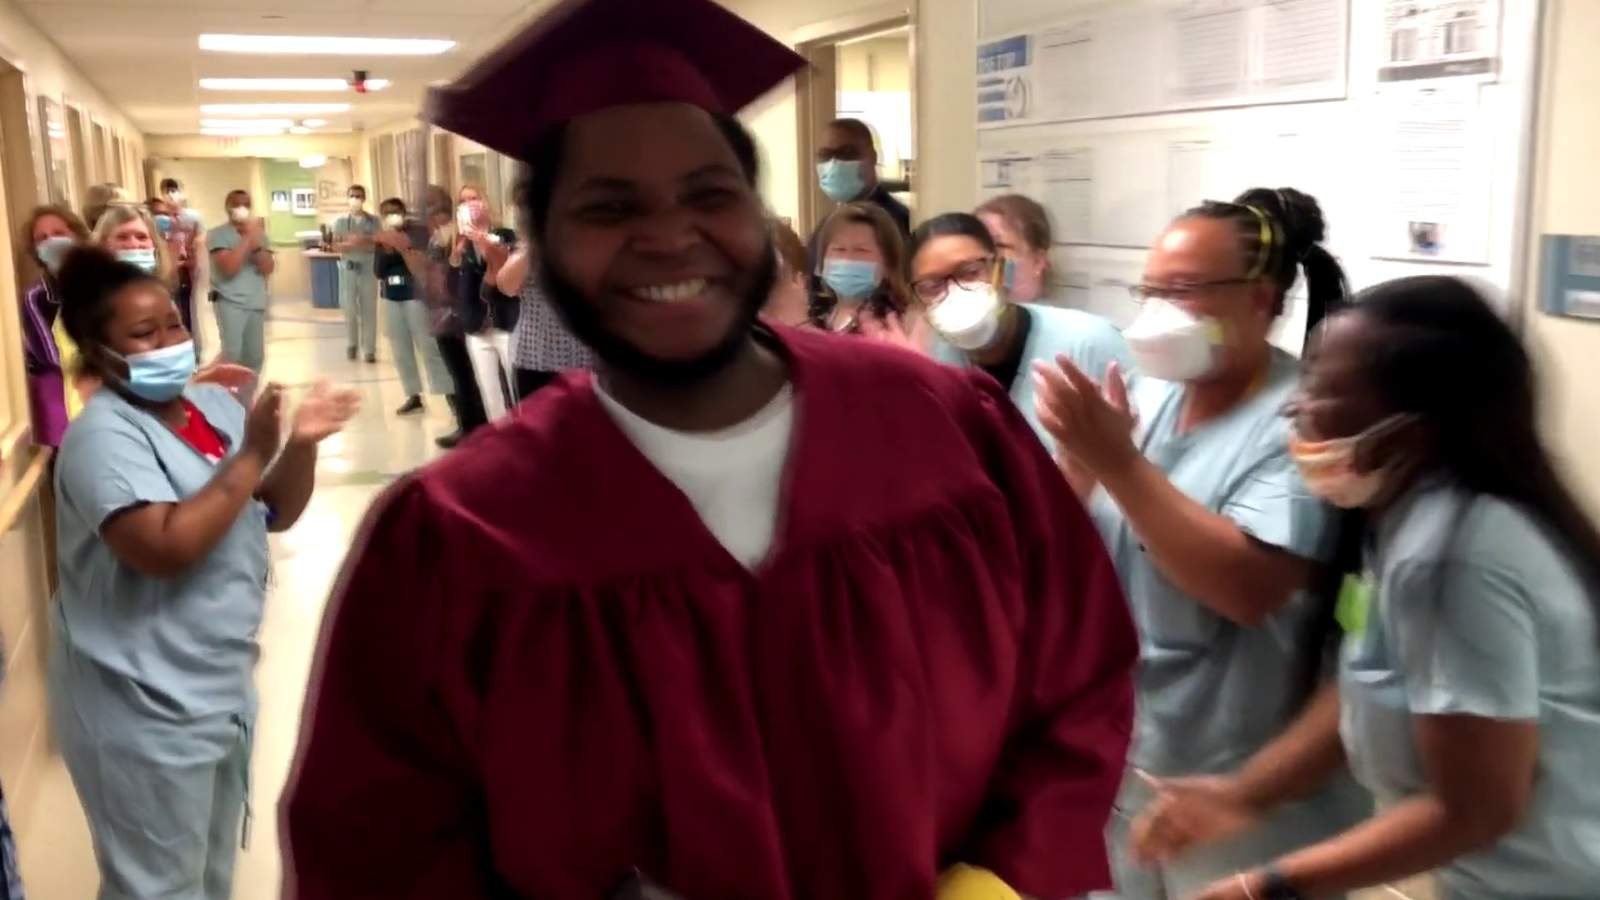 FULL VIDEO: River Rouge high schooler celebrates surviving COVID-19 after 3 weeks on ventilator